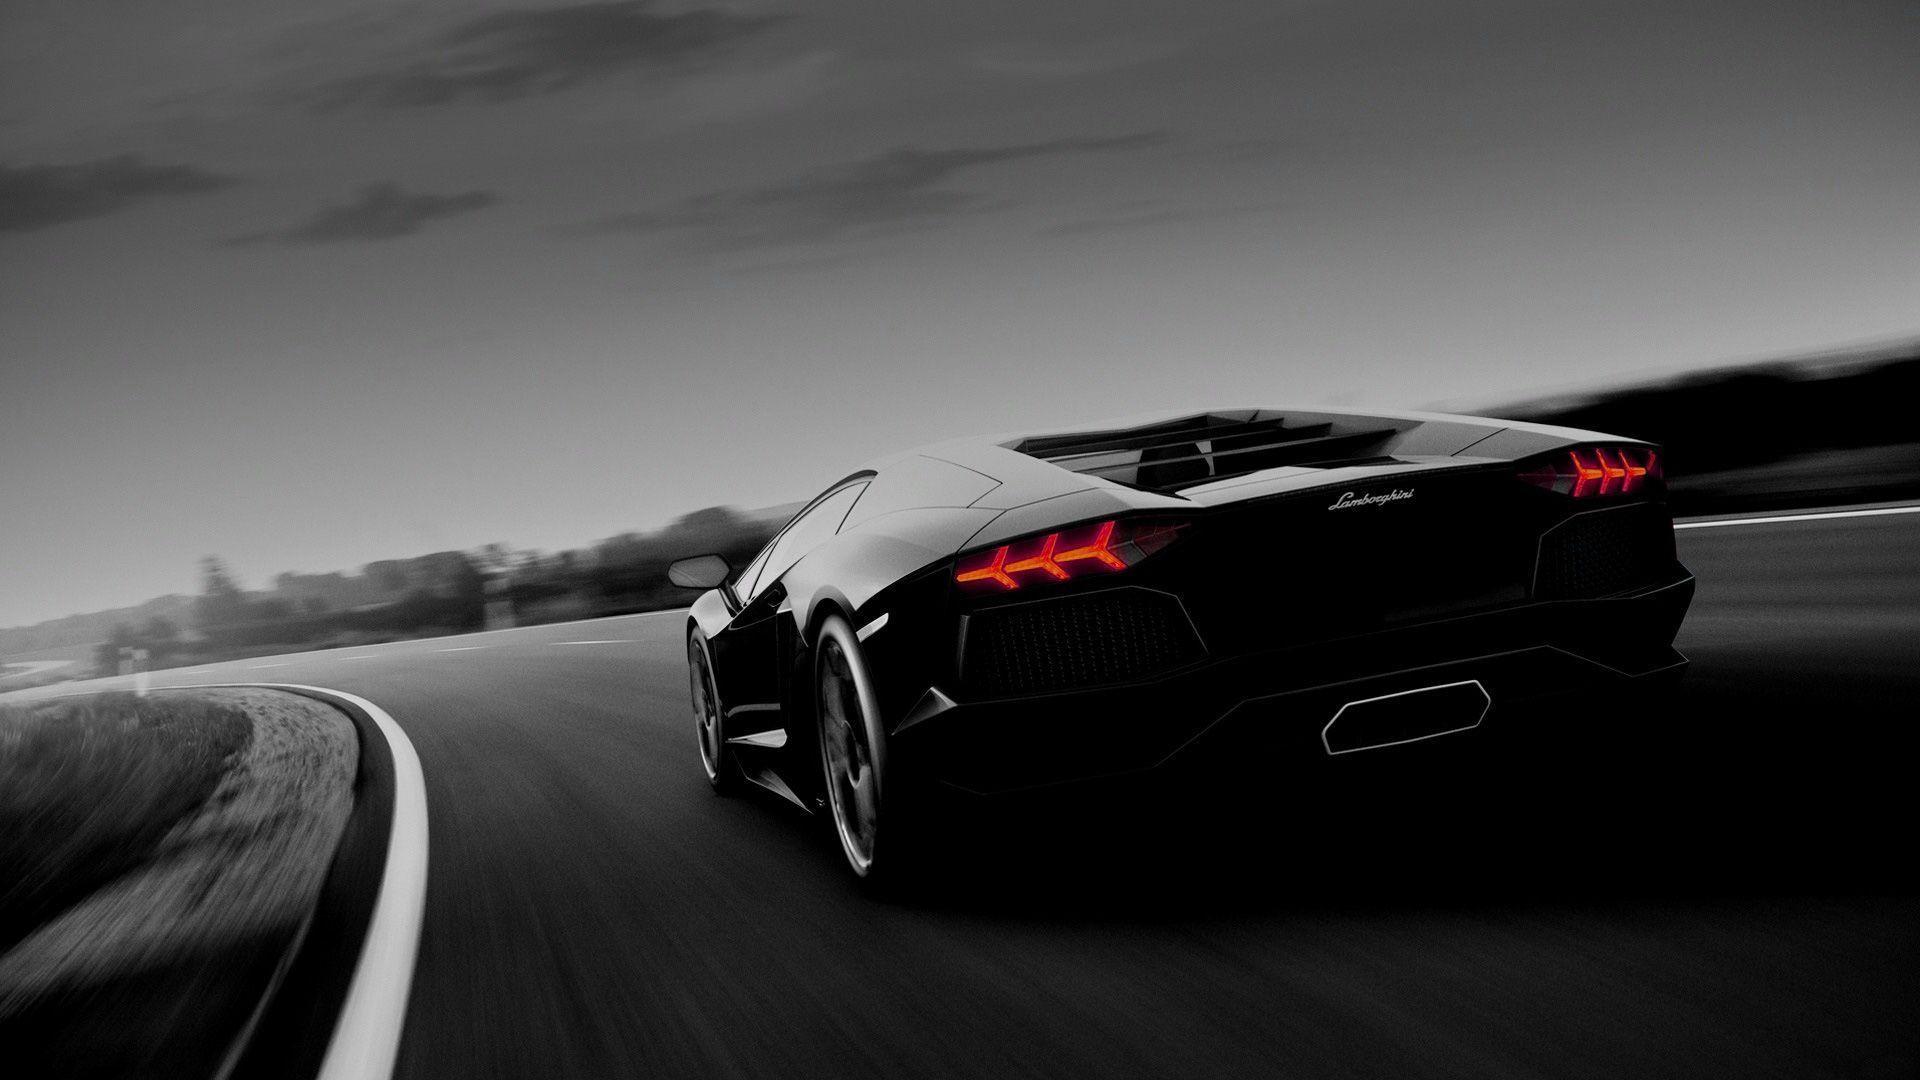 Lamborghini Aventador HD Background. Wallpaper, Background